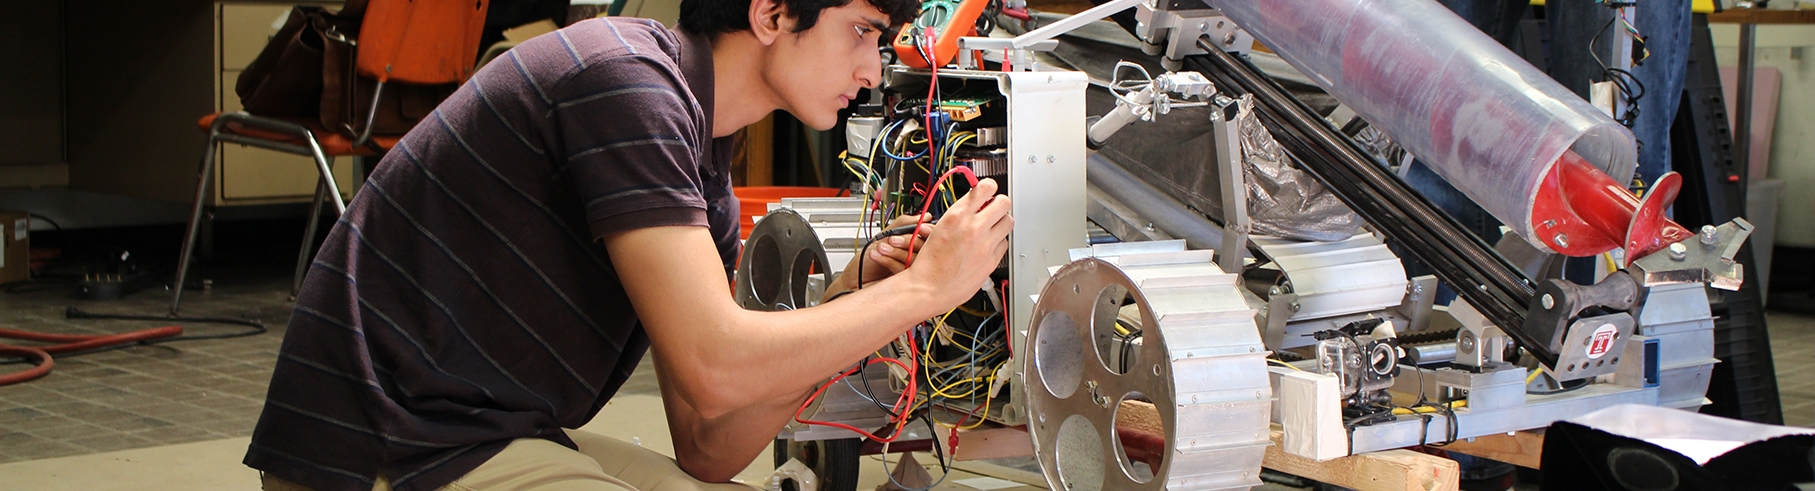 Undergraduate engineering student working on rover